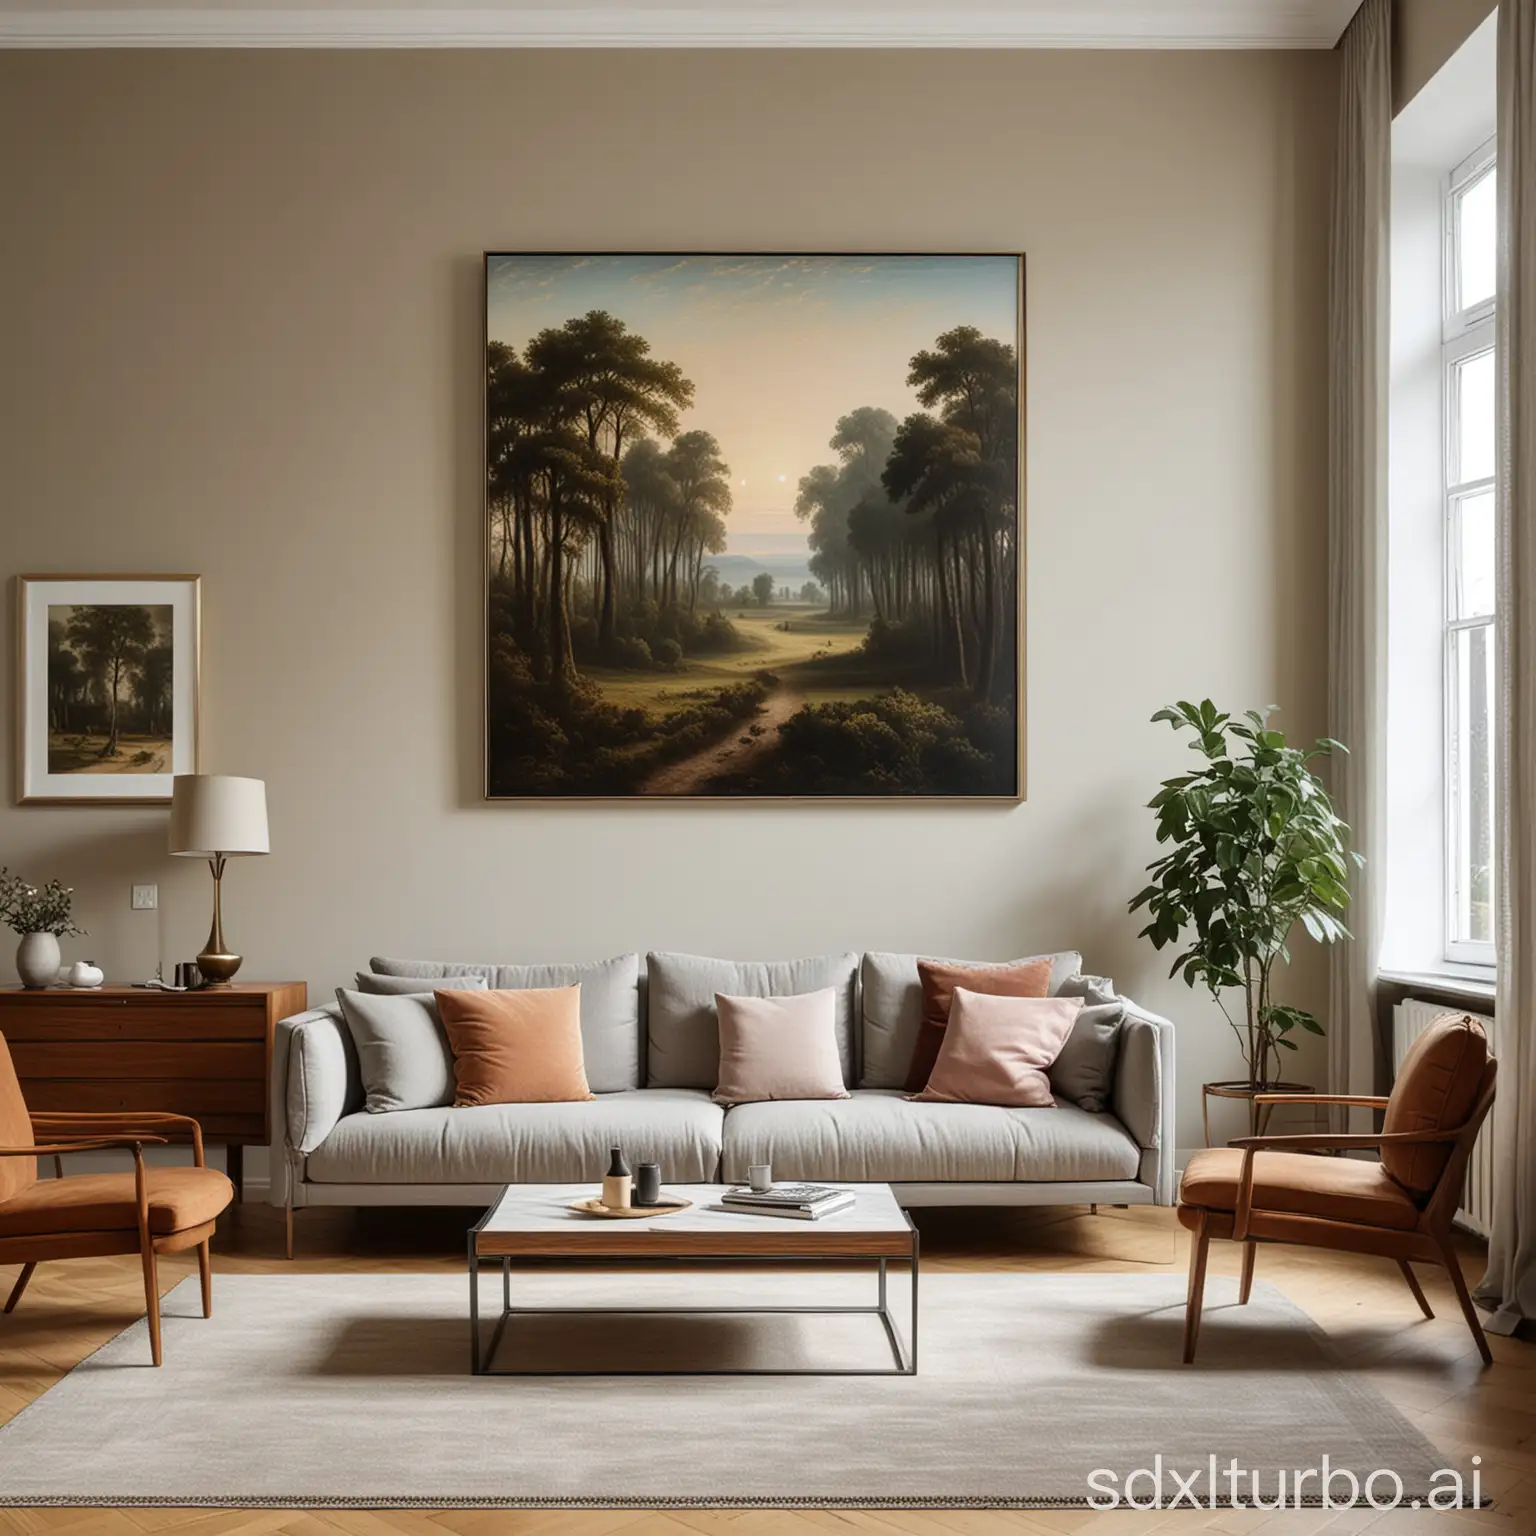 cosy elegant modern berlin apartment livingroom, modern design furniture,  painting by Caspar David Friedrich on the wall